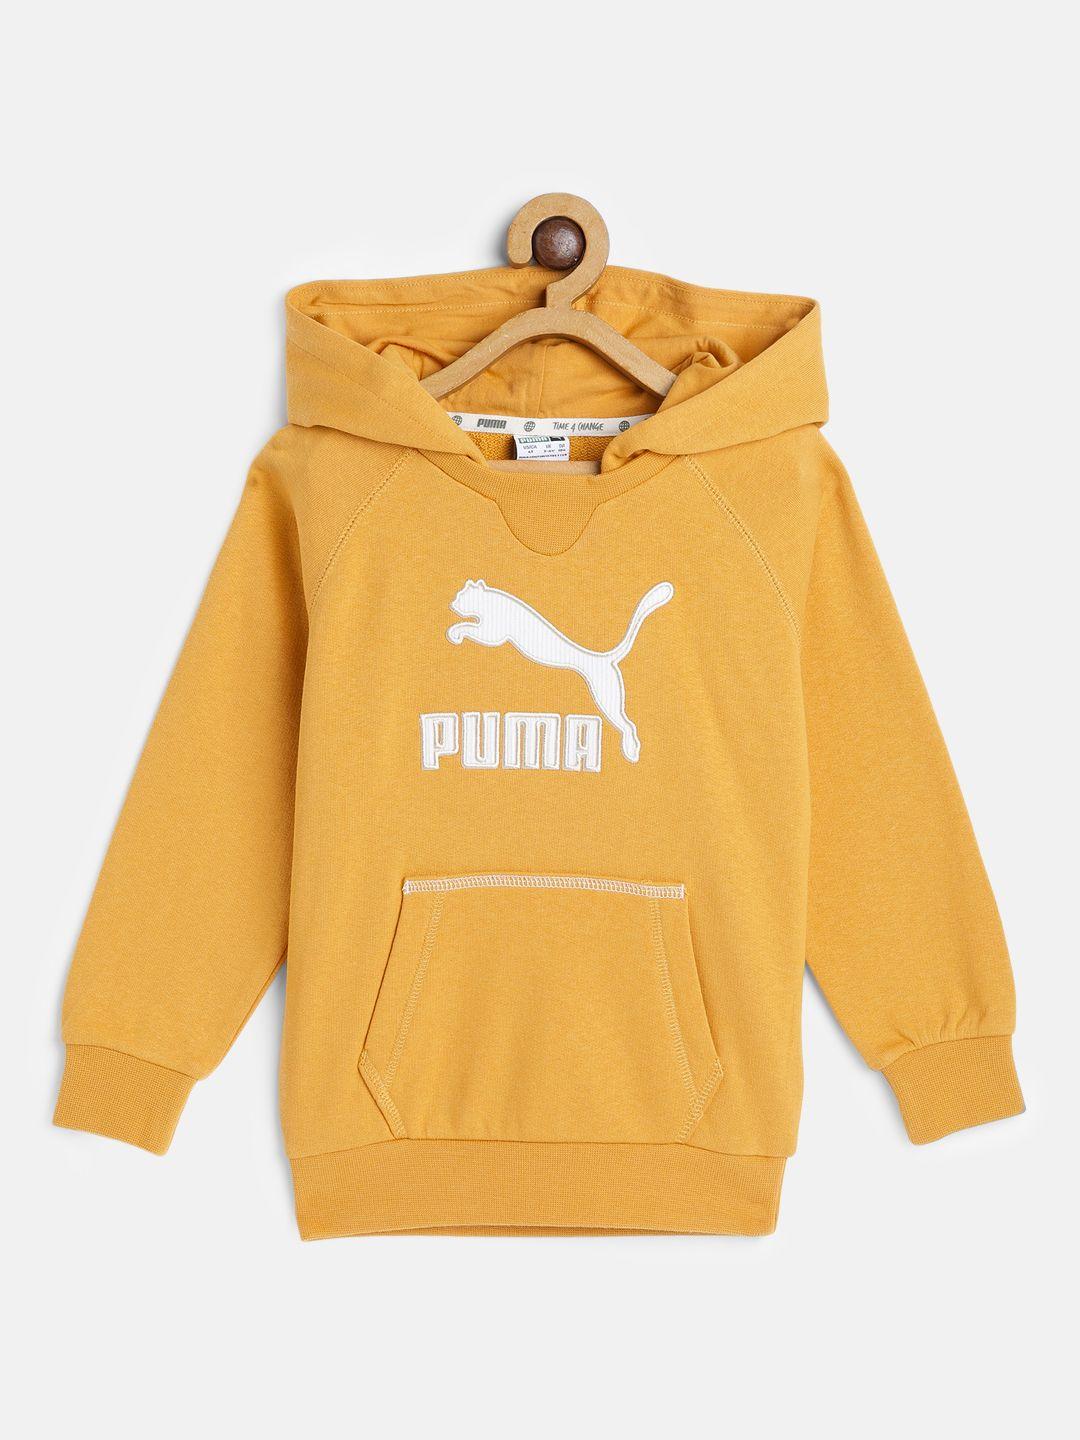 puma kids yellow brand logo printed hooded sweatshirt